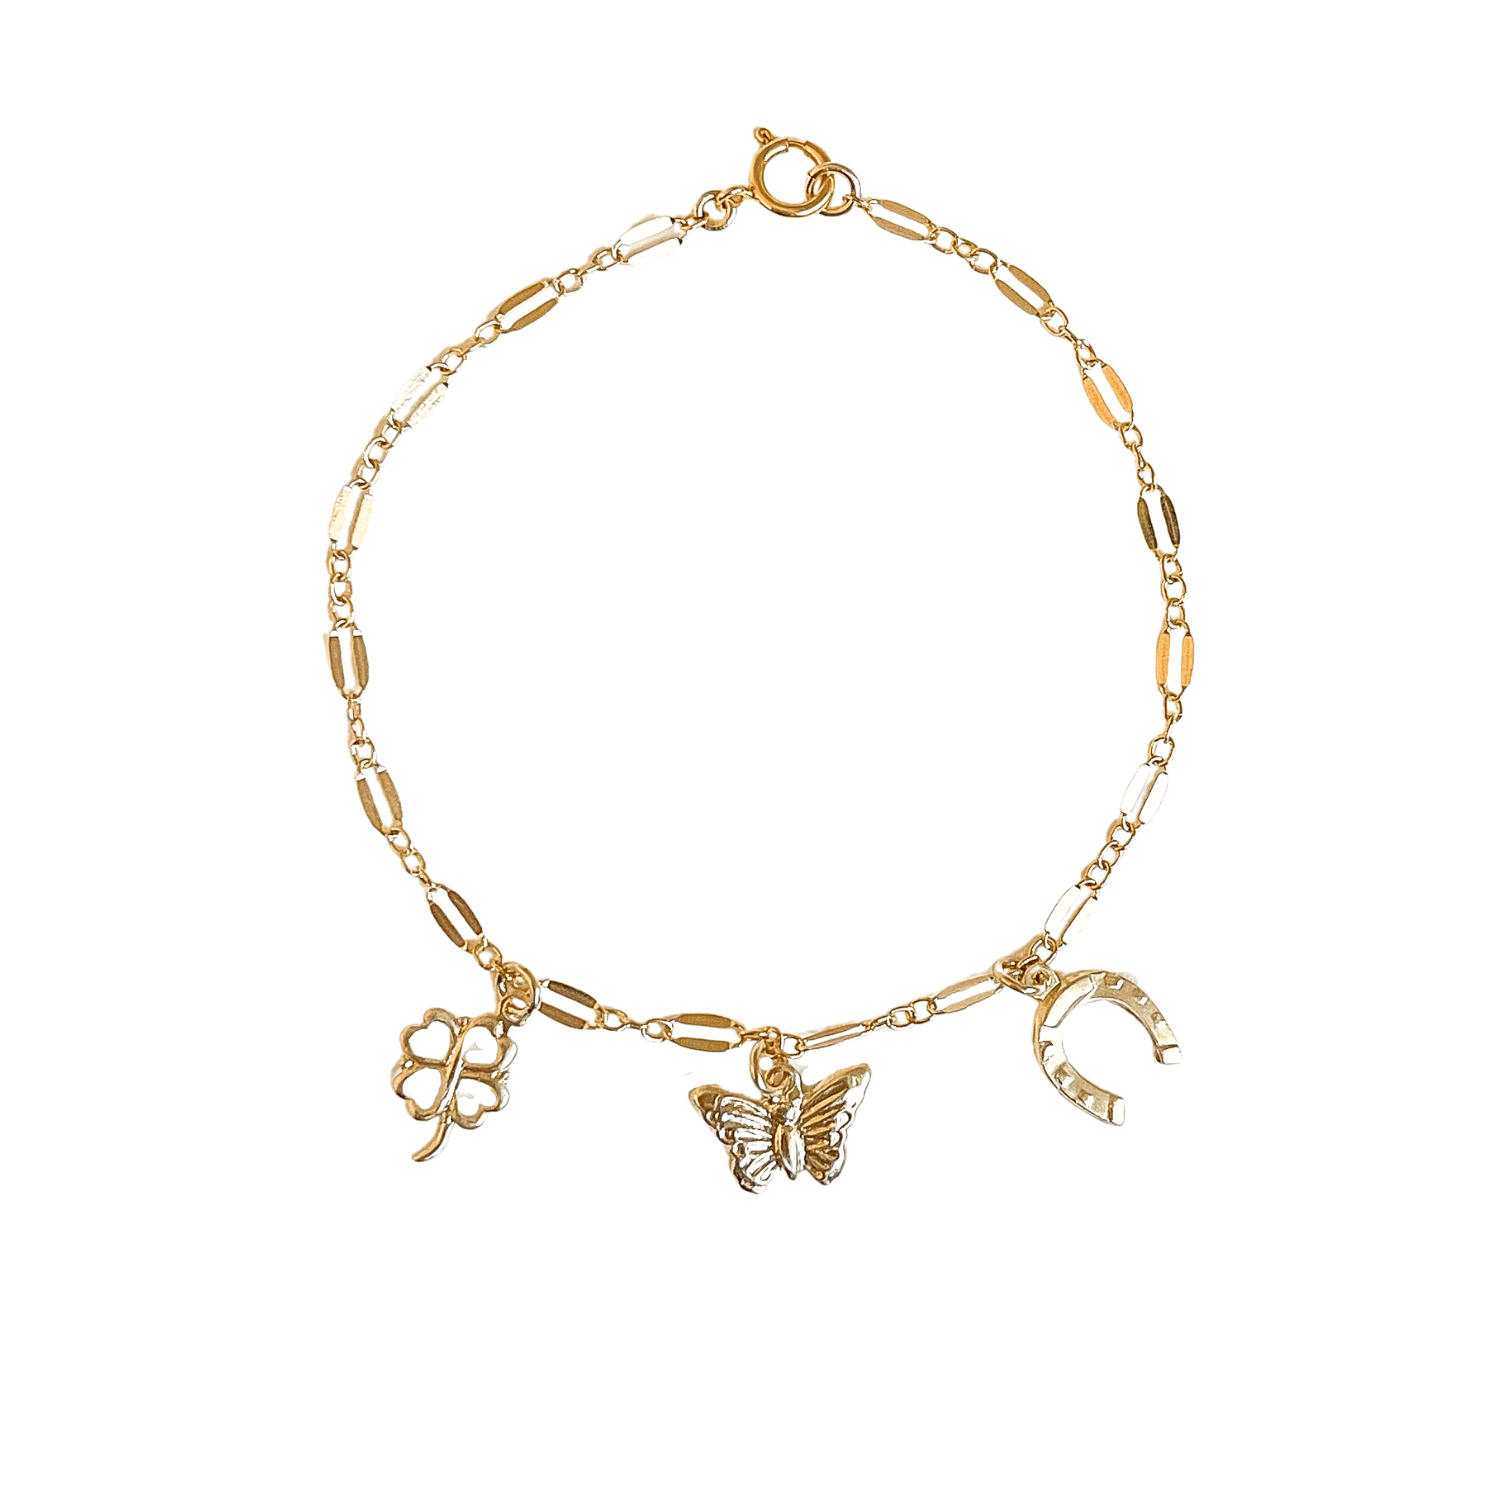 Sparkle Chain Bracelet - 14k Gold Filled